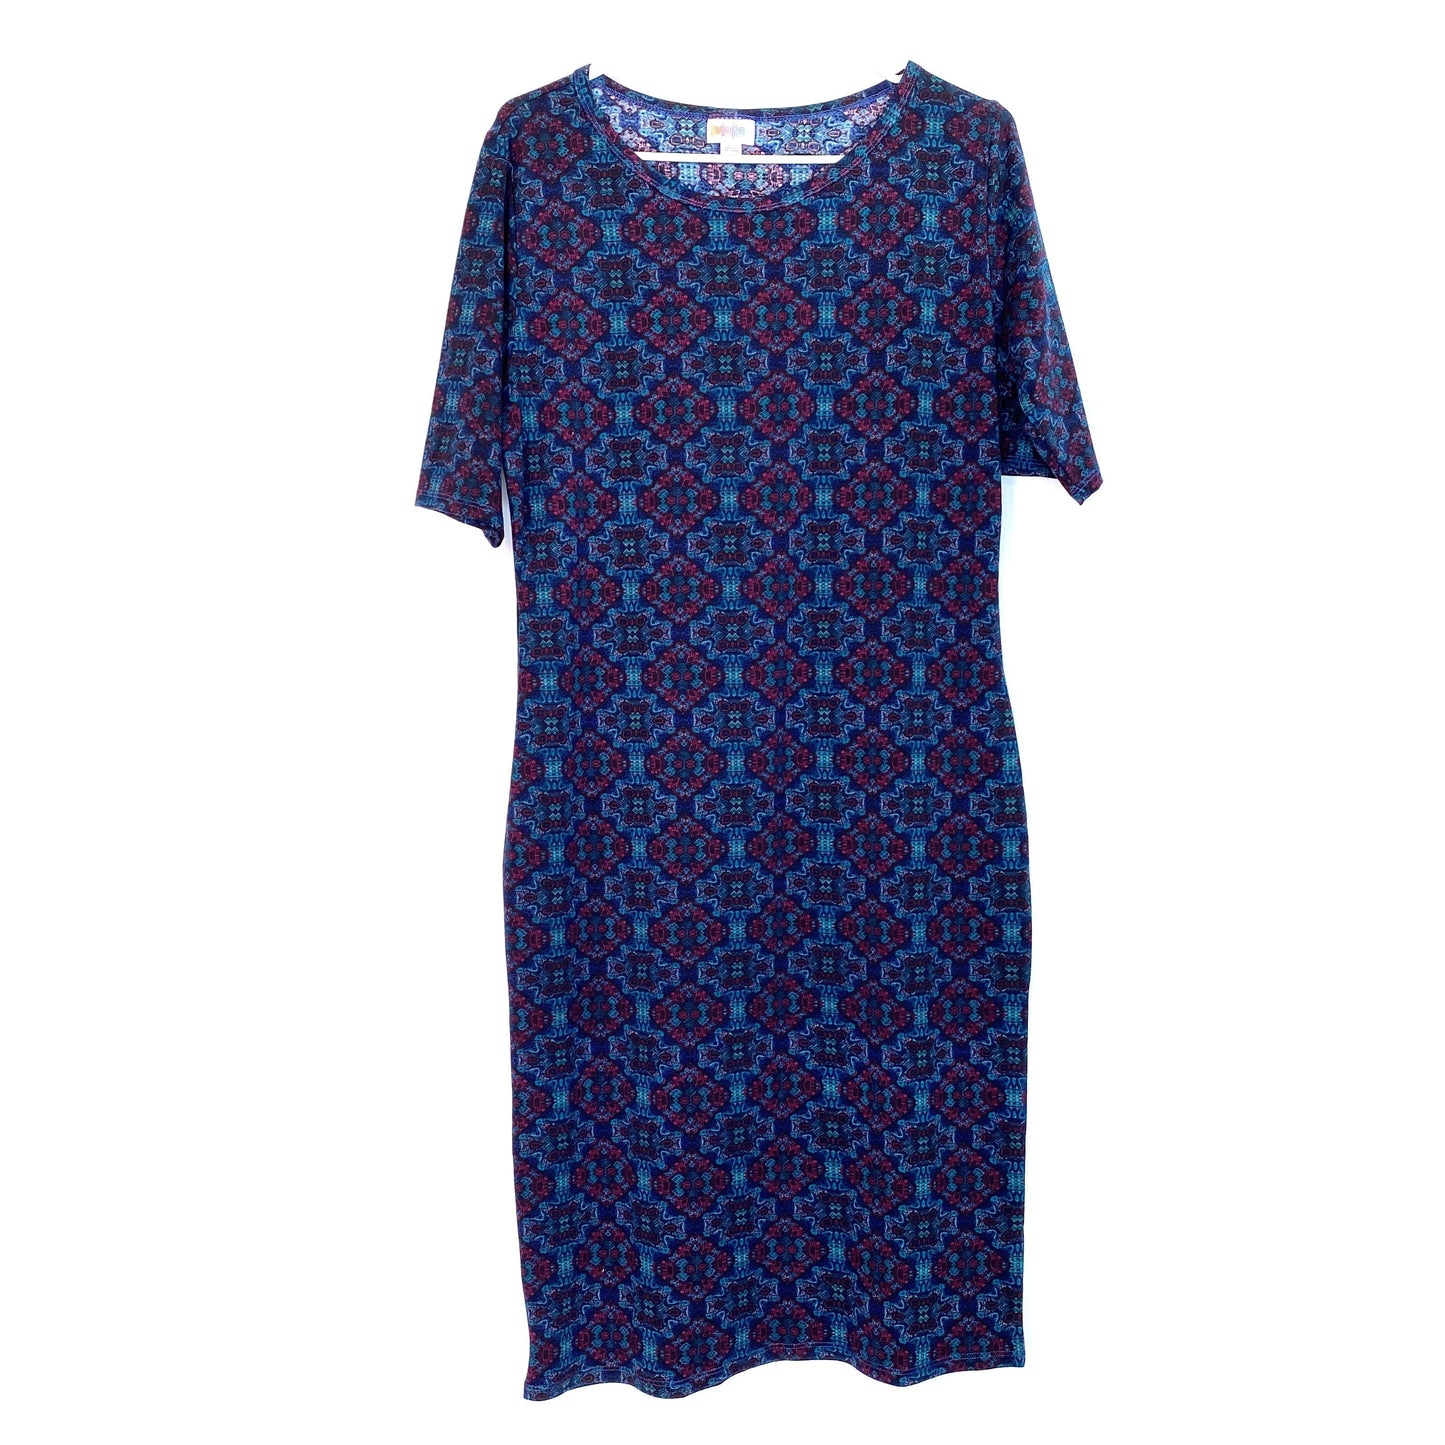 LuLaRoe Womens Size L Multicolor Dress Geometric Pattern Print S/s